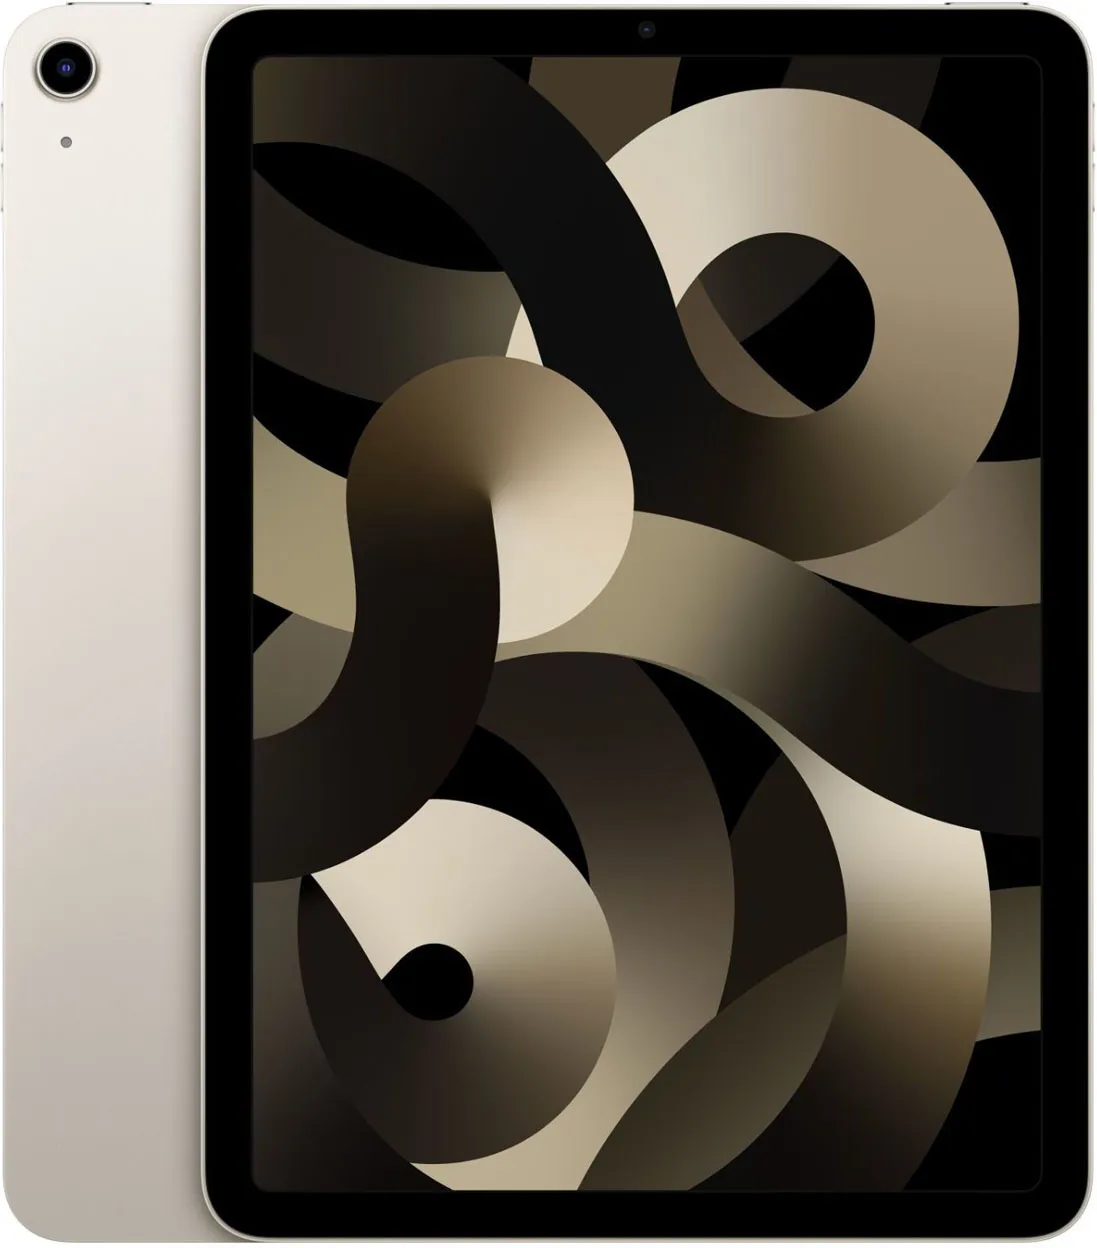 2022 Apple iPad Air with Apple M1 Chip (10.9-inch/27.69 cm, Wi-Fi, 64GB) - Starlight (5th Generation)